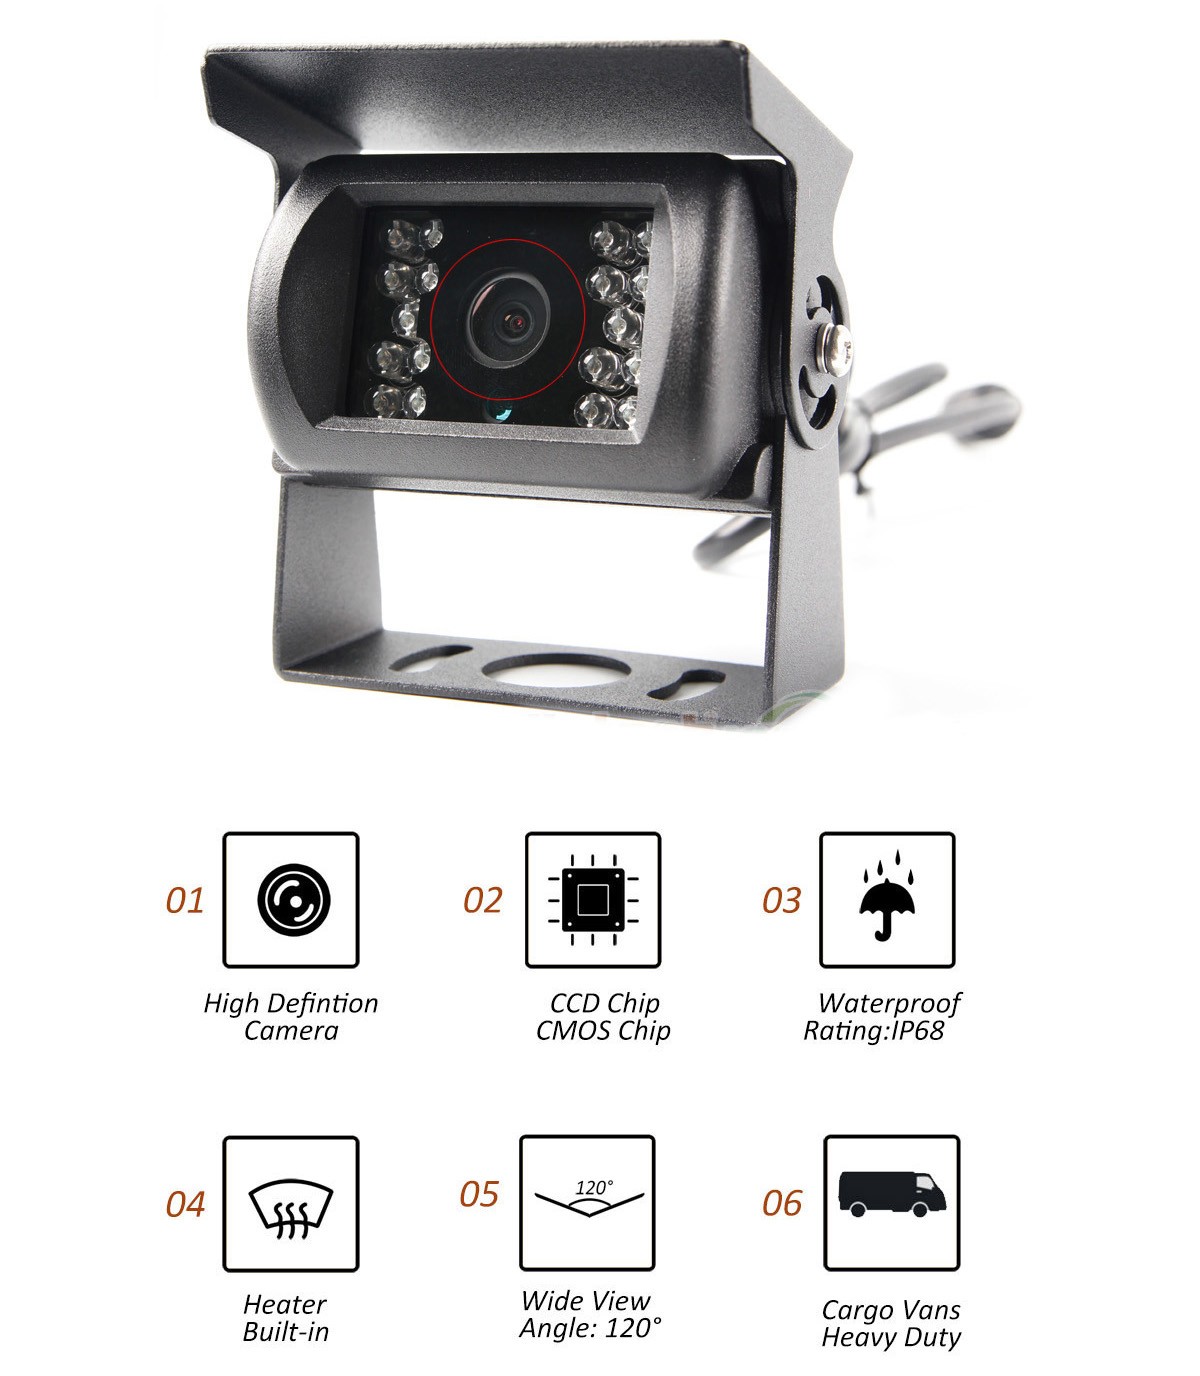 HD カメラは -40°C への耐性 - IP69K 保護